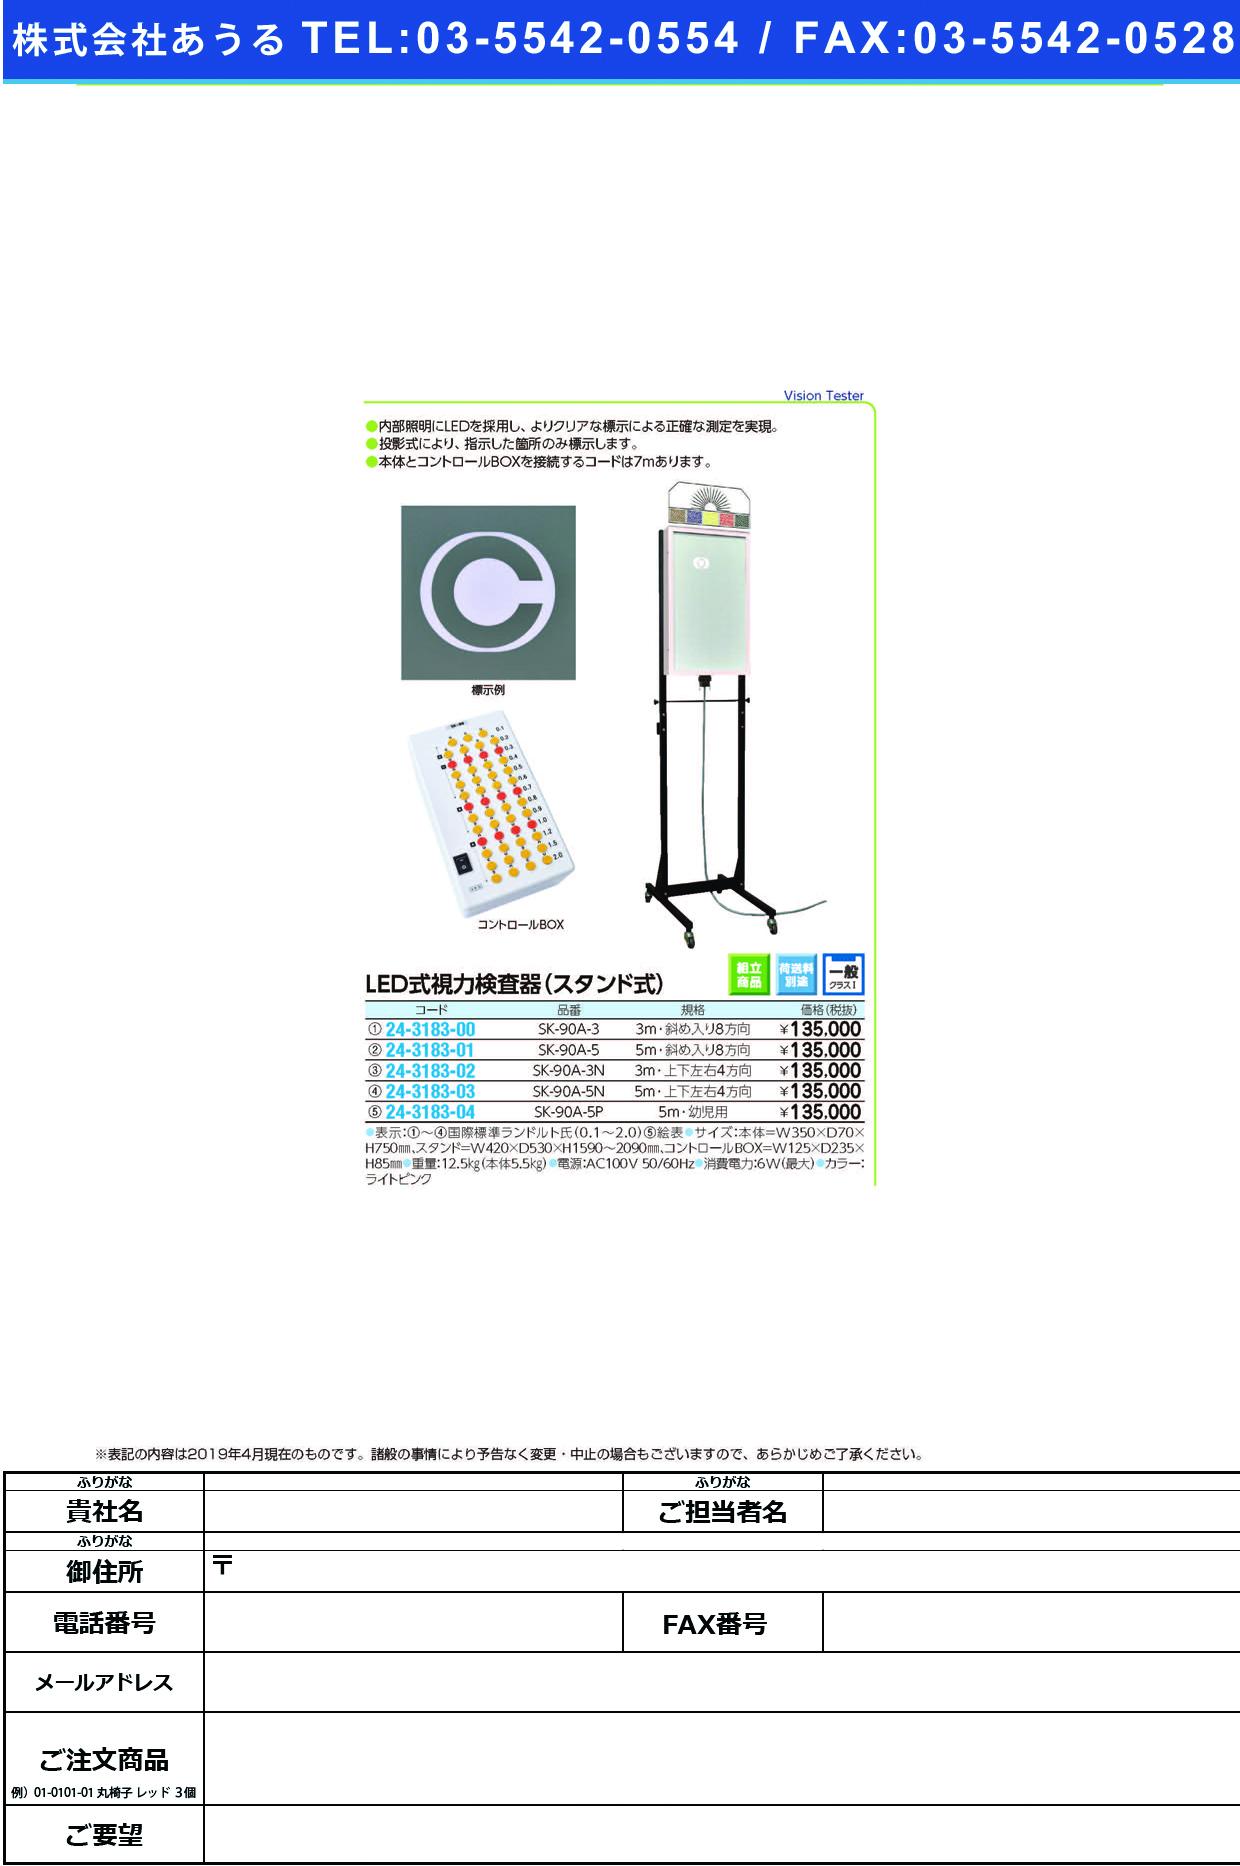 (24-3183-02)ＬＥＤ式視力検査器（スタンド式３ｍ用 SK-90A-3N(4ﾎｳｺｳ) LEDｼｷｼﾘｮｸｹﾝｻｷｽﾀﾝﾄﾞｼｷ【1台単位】【2019年カタログ商品】